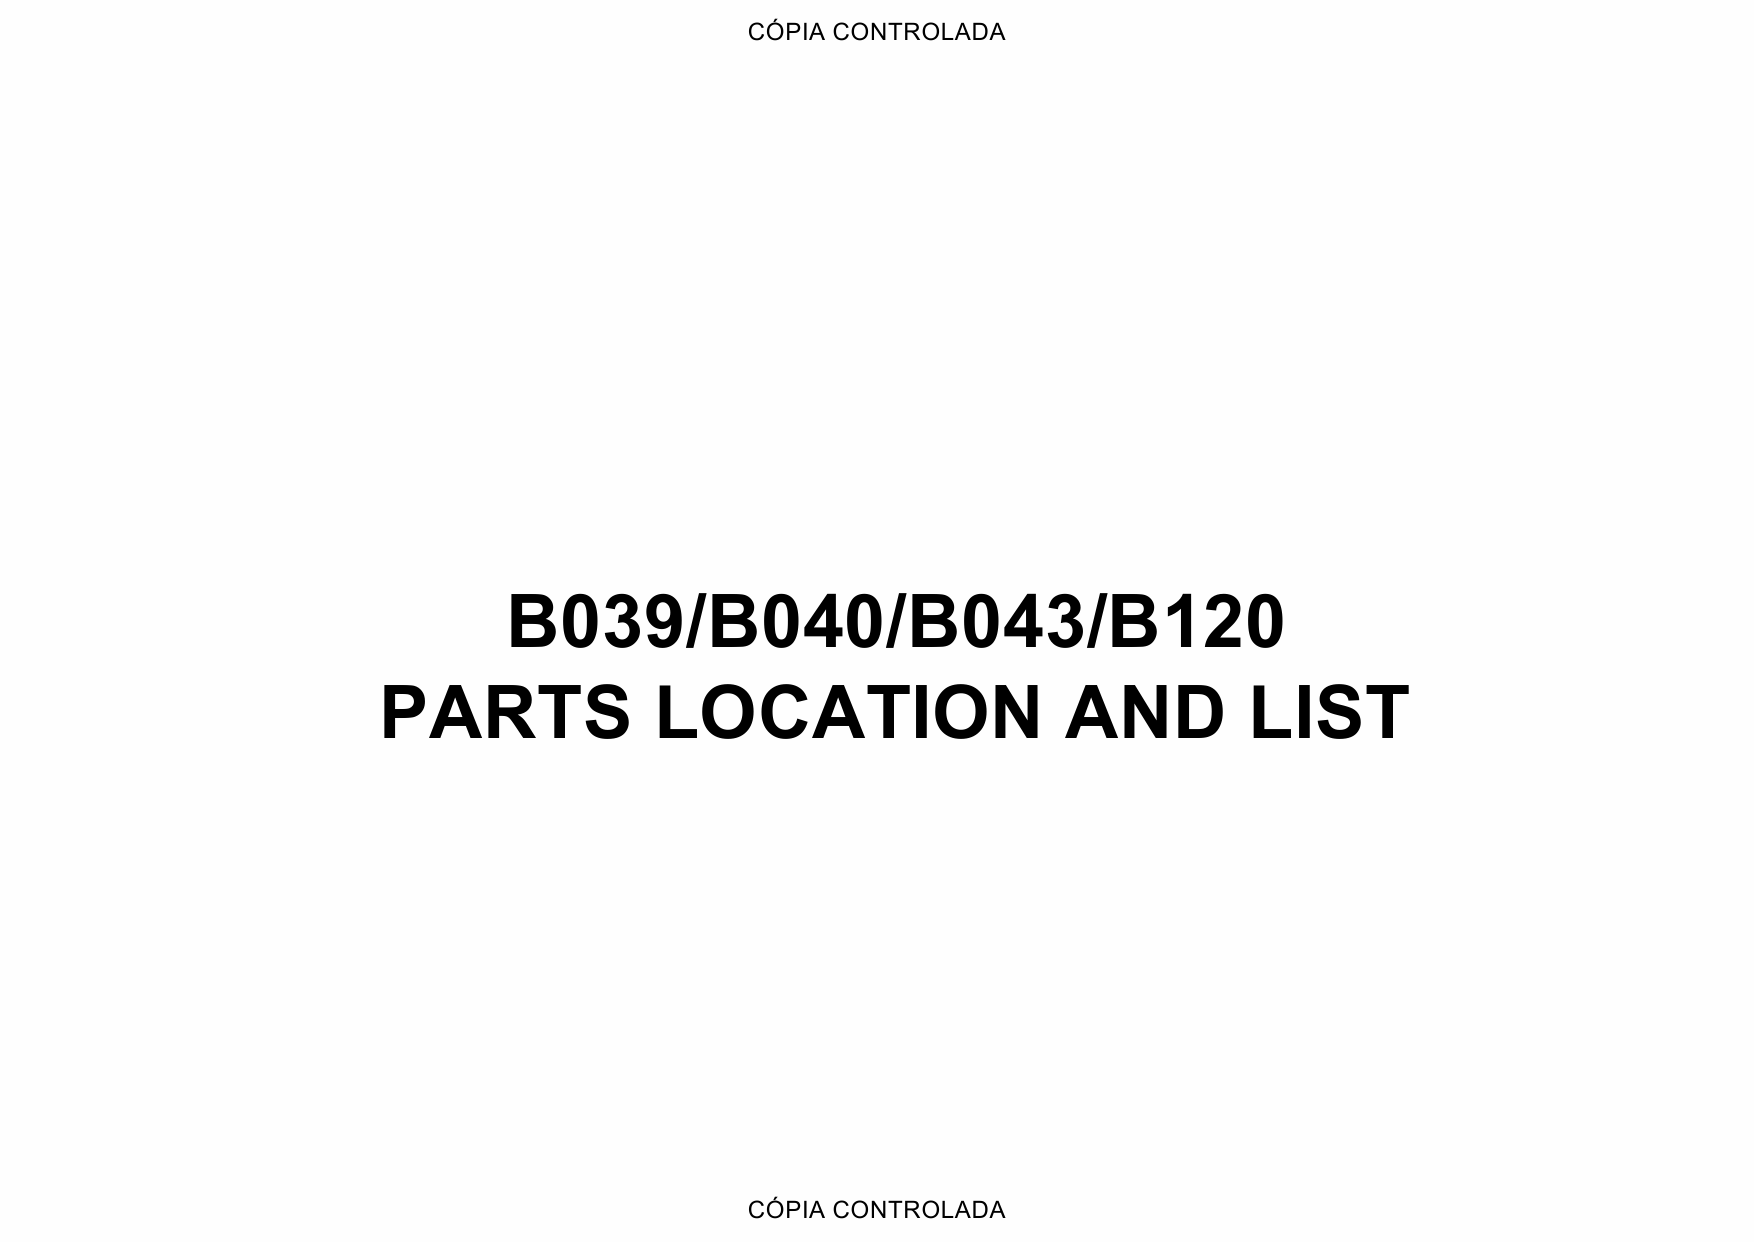 RICOH Aficio 1113 B120 Parts Catalog-5